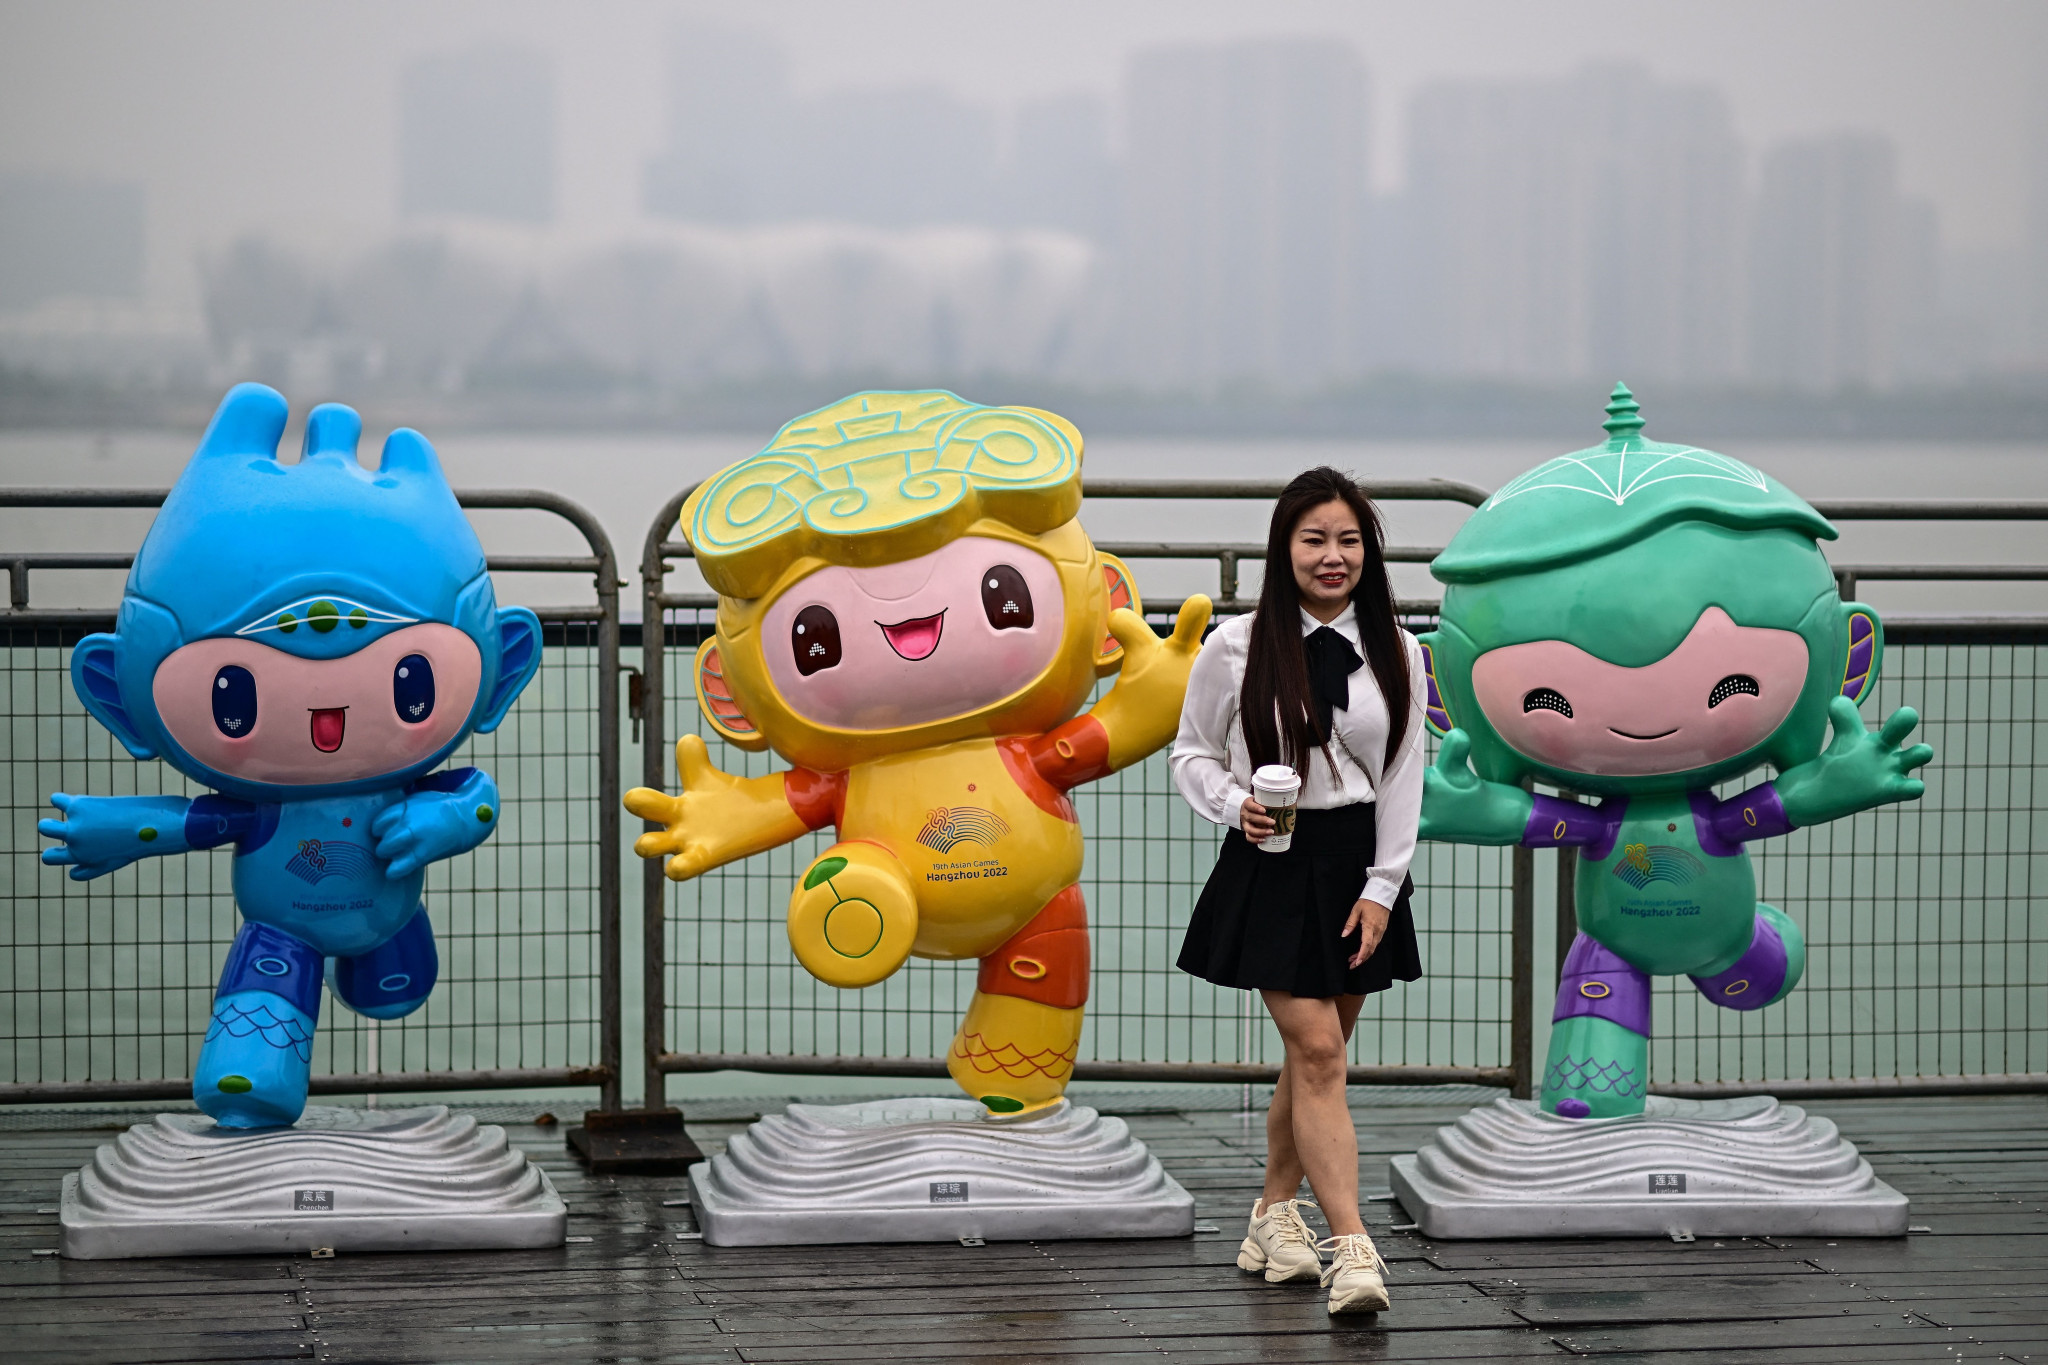 Hangzhou 2022 claims mascots key to CNY¥700 million sales boost